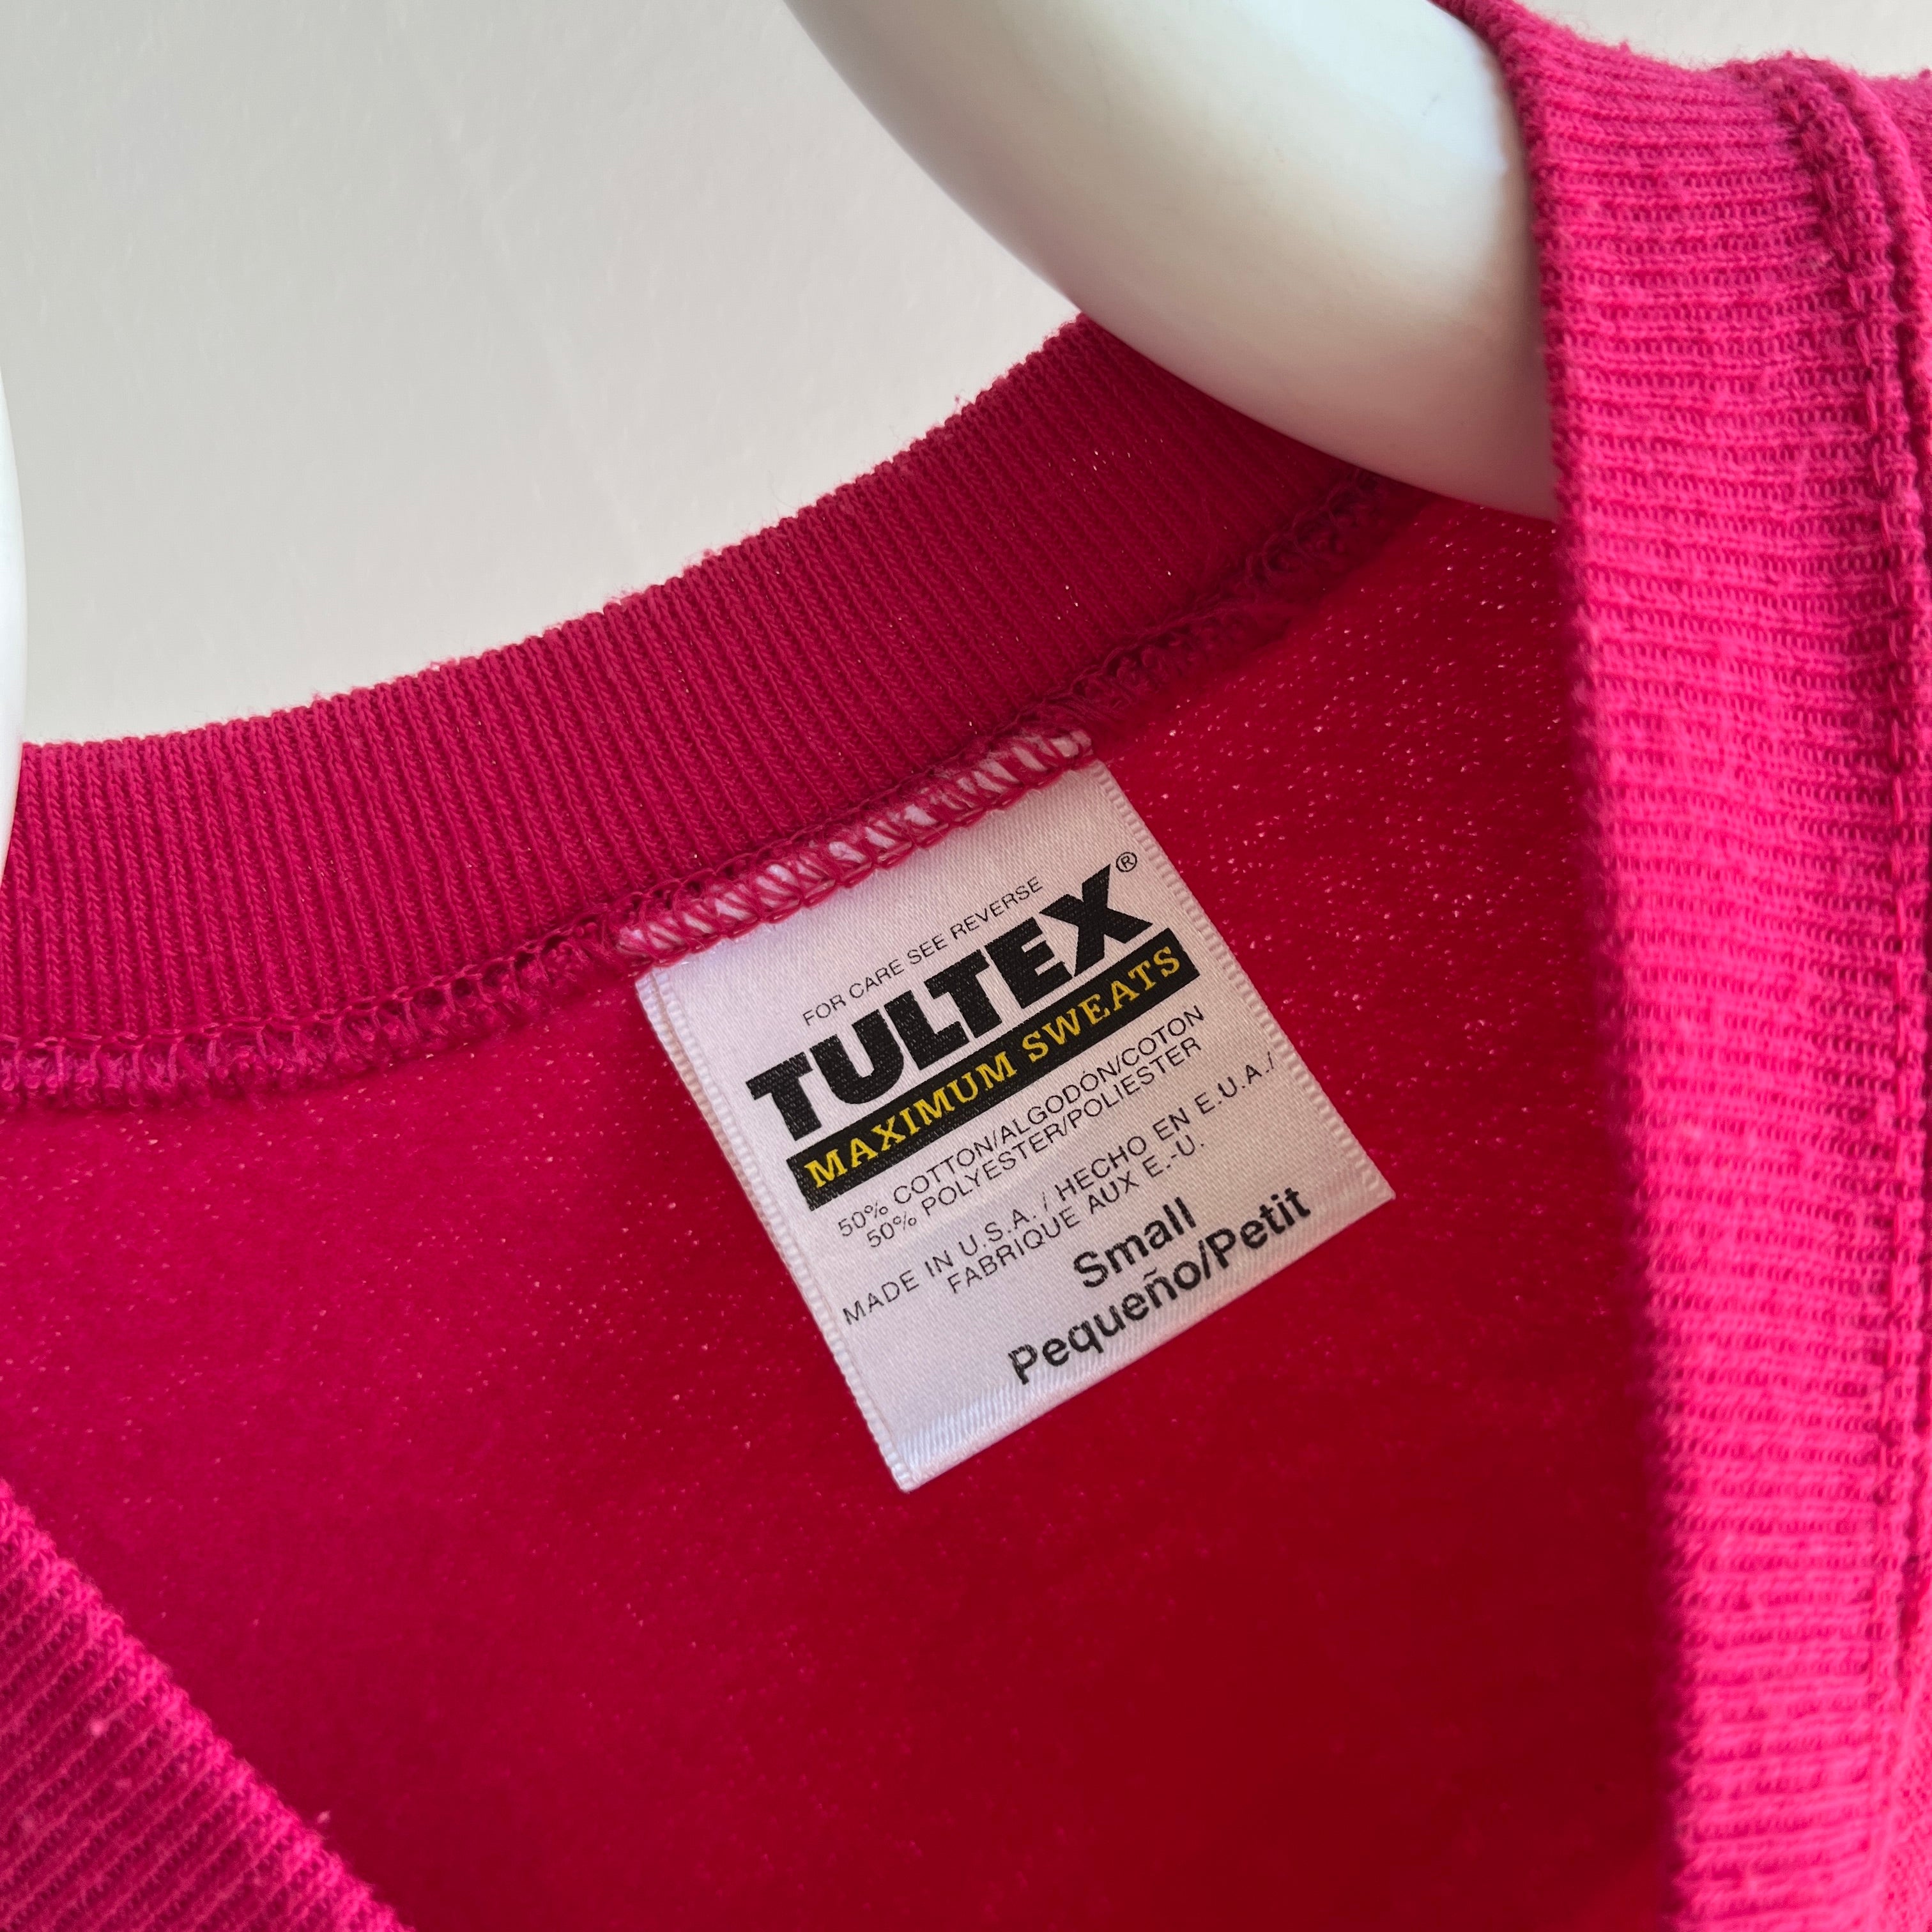 1990s Hot Pink USA Made Sweatshirt by Tultex